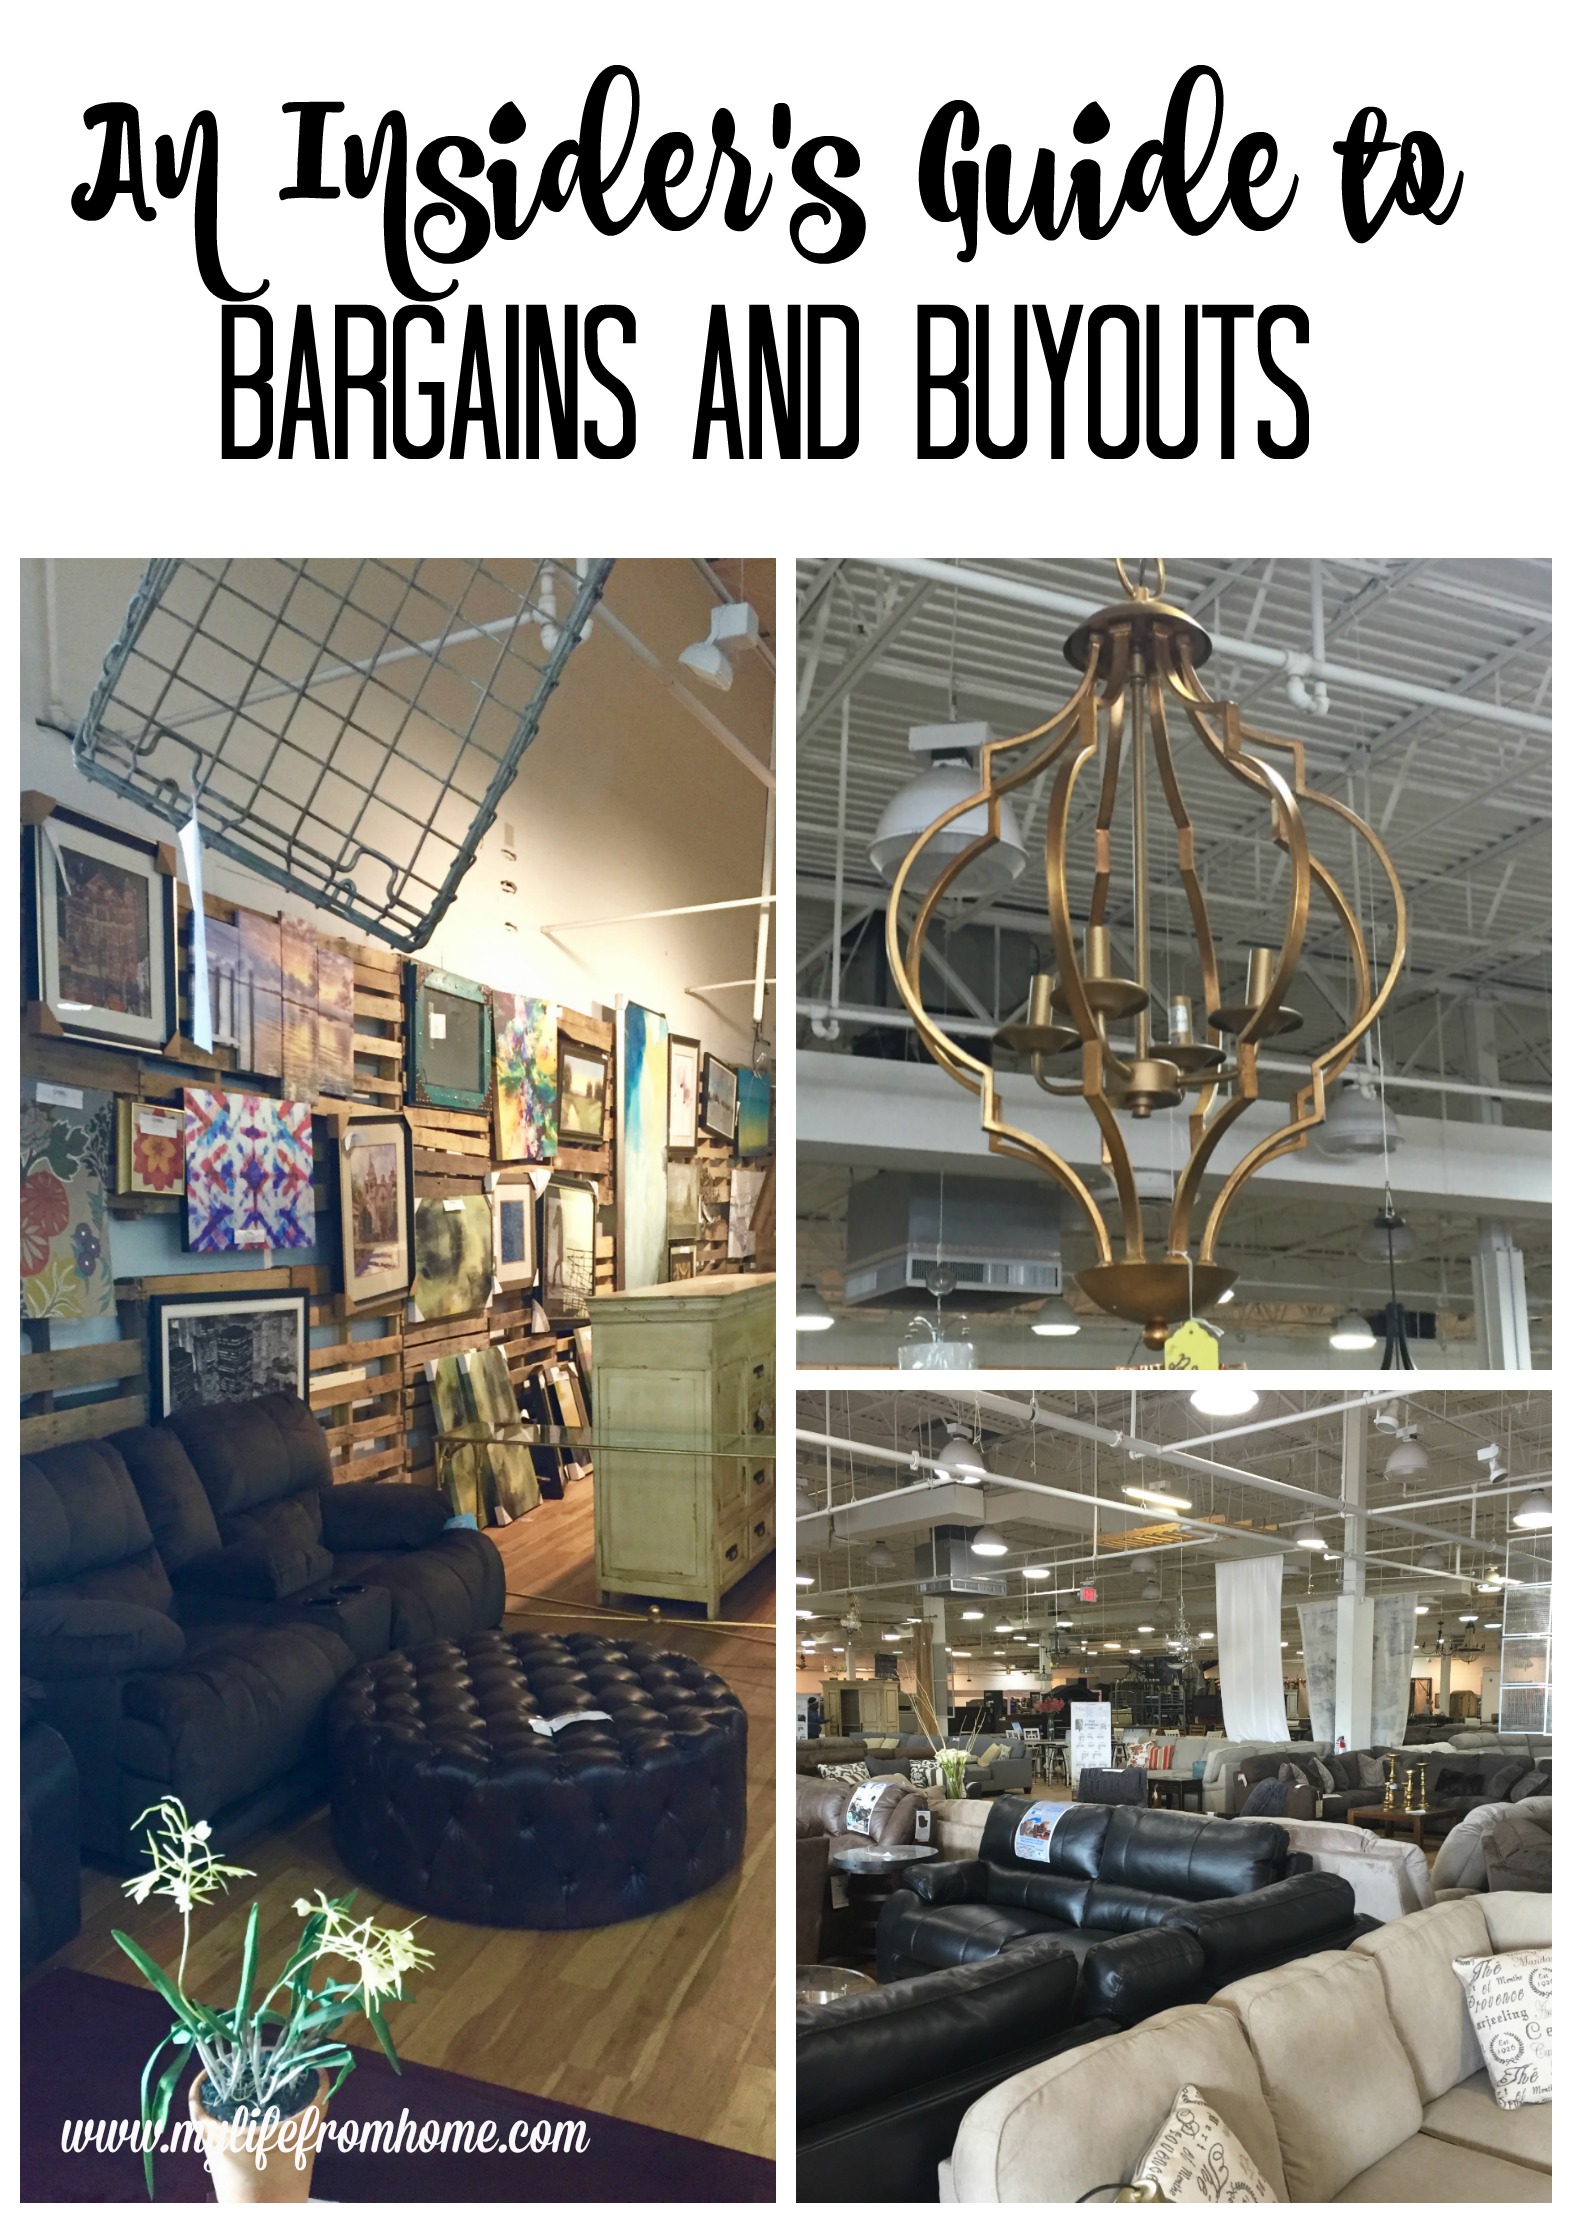 an-insiders-guide-to-bargains-and-buyouts-cincinnati-ohio-furniture-store-bargain-shopping-liquidated-furniture-home-decor-accessories-cincinnati-store